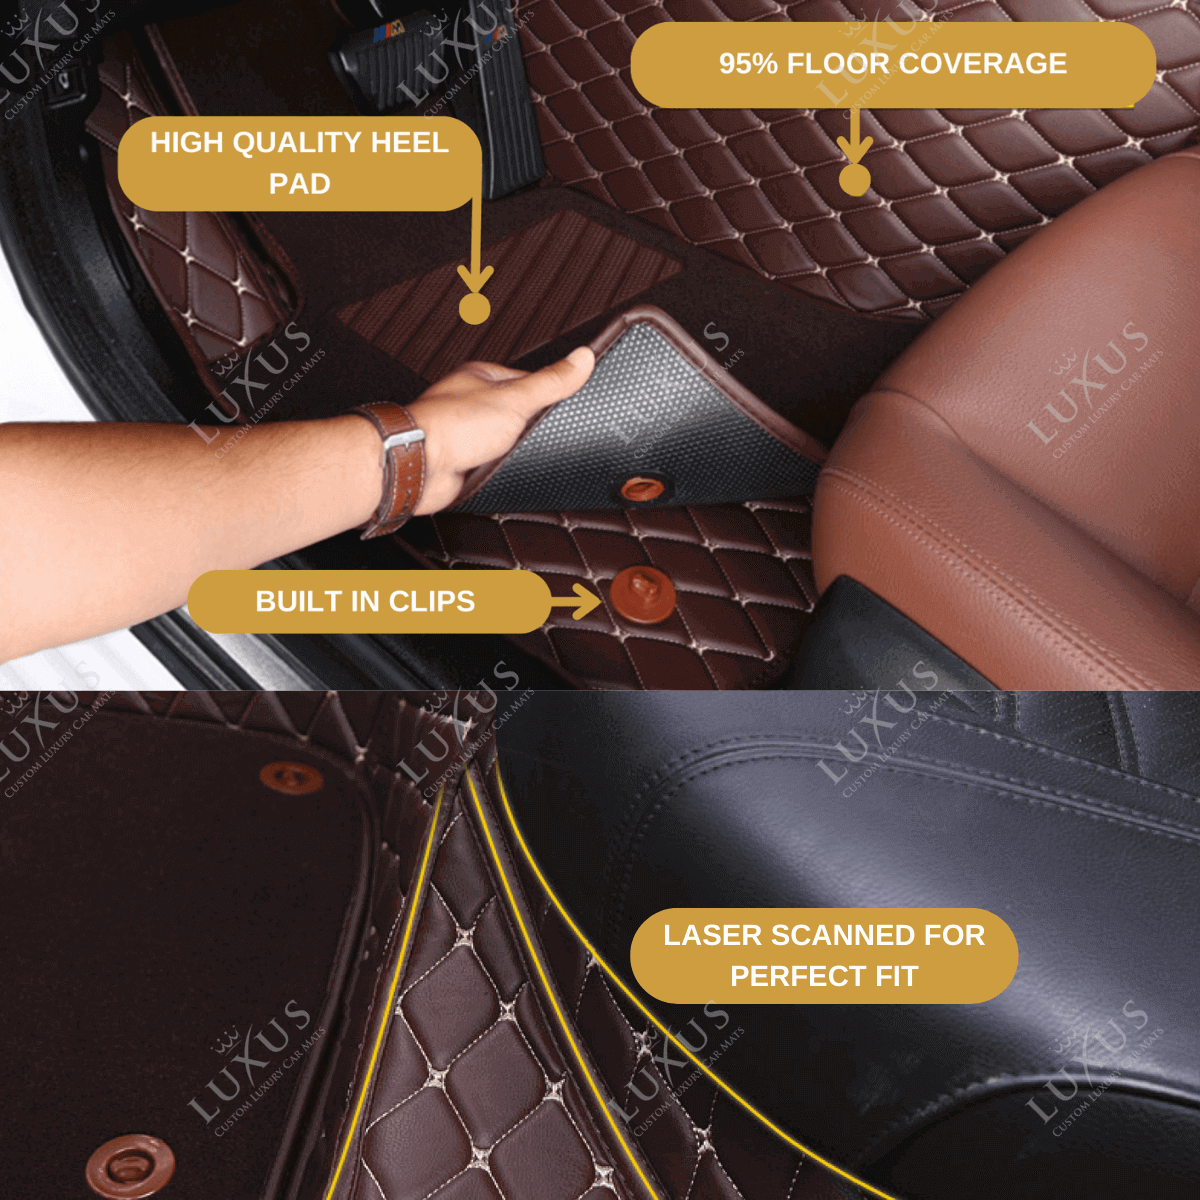 Chocolate Brown Diamond Base & Black Top Carpet Double Layer Luxury Car Mats Set